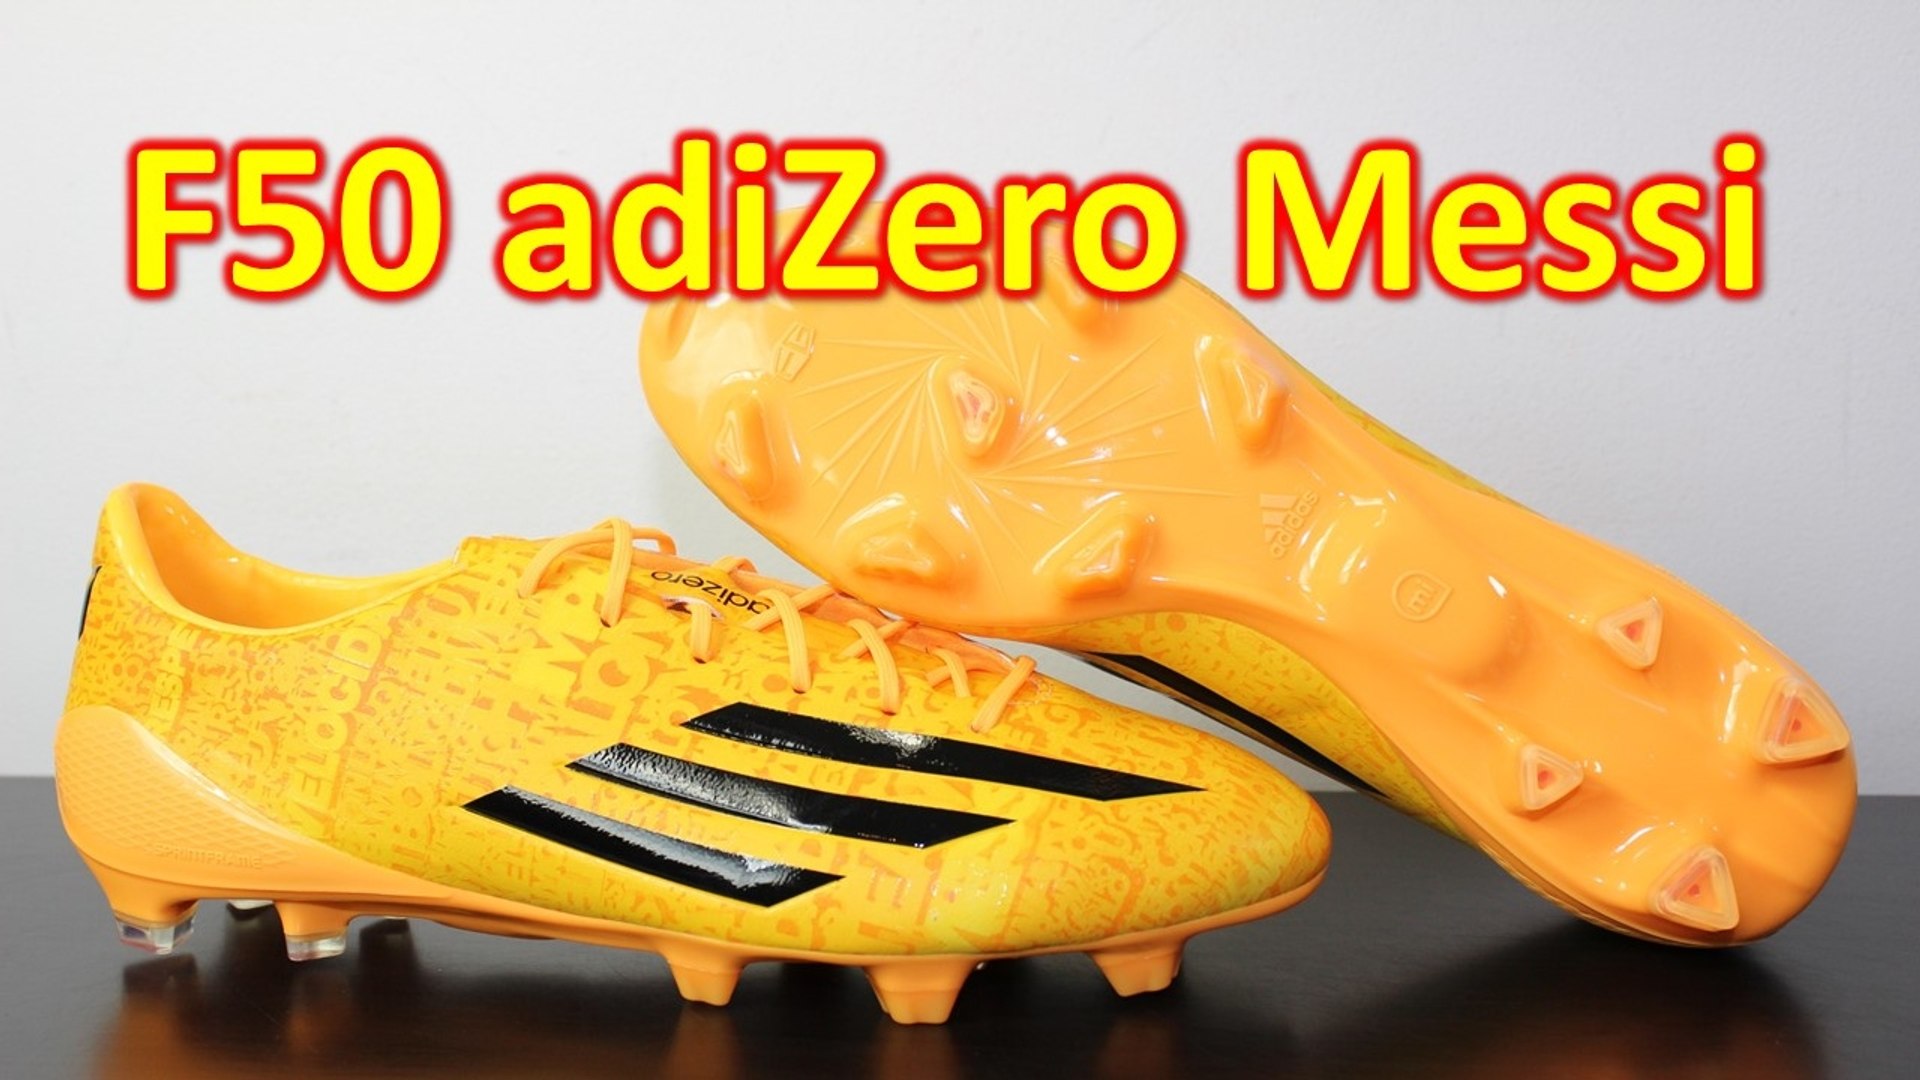 Messi Adidas F50 adiZero 2014 Unboxing & On Feet - video Dailymotion